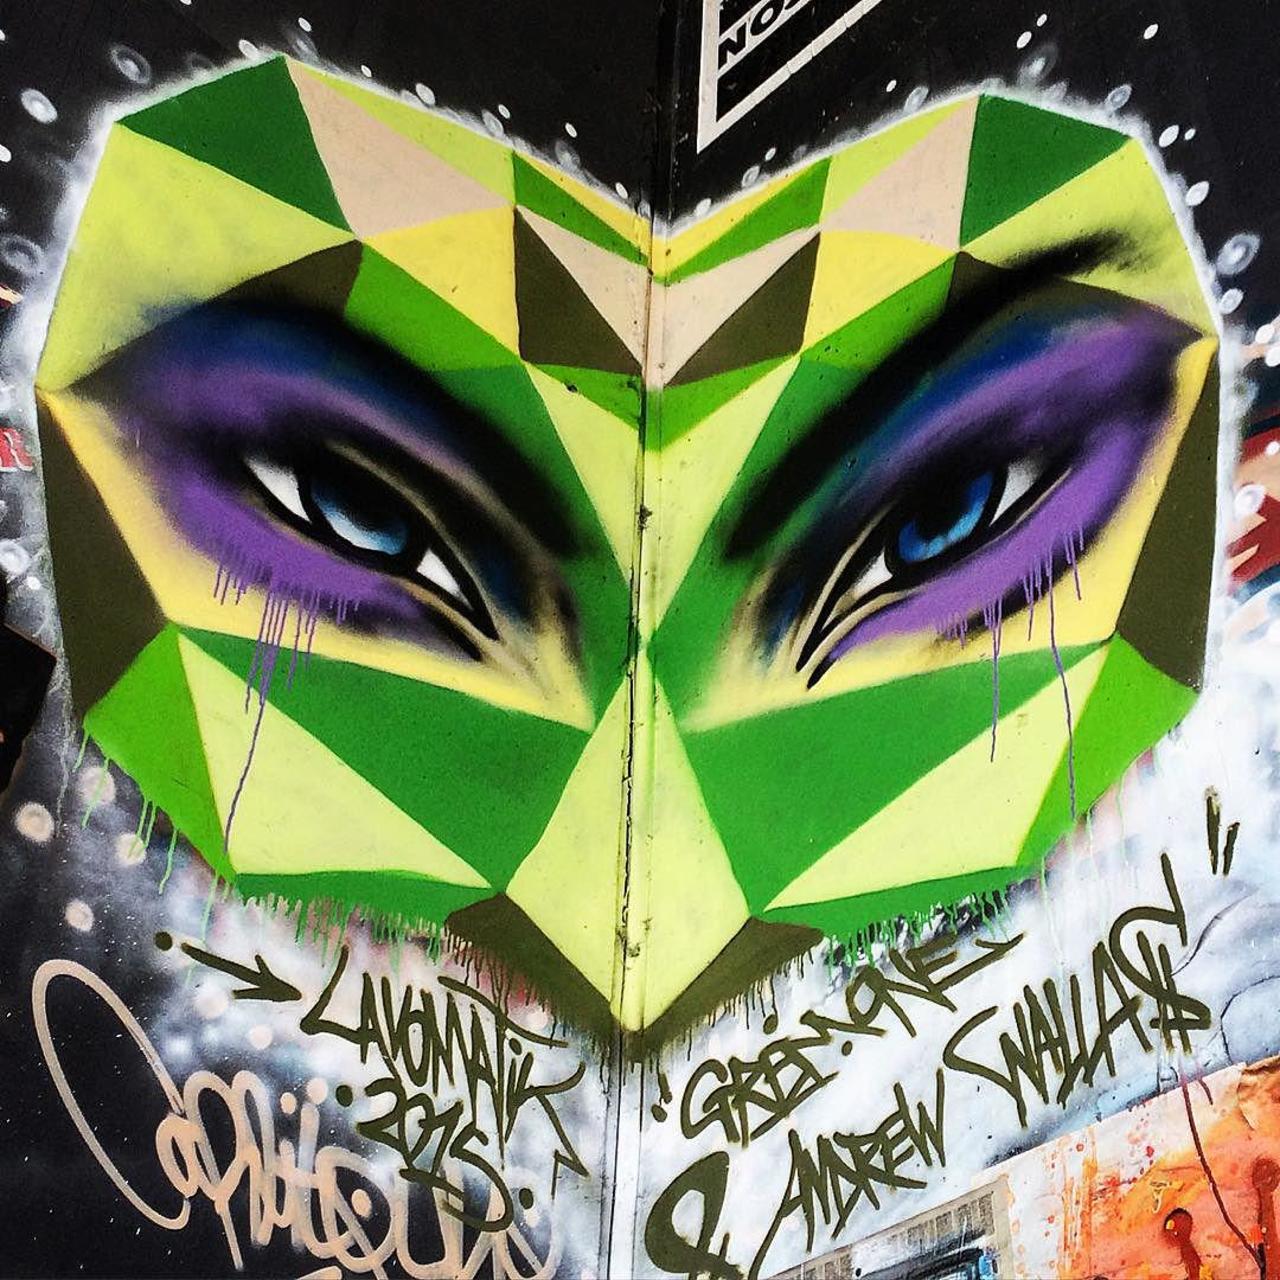 #Paris #graffiti photo by @julosteart http://ift.tt/1Jx6wRM #StreetArt http://t.co/0fiiHw2FrM